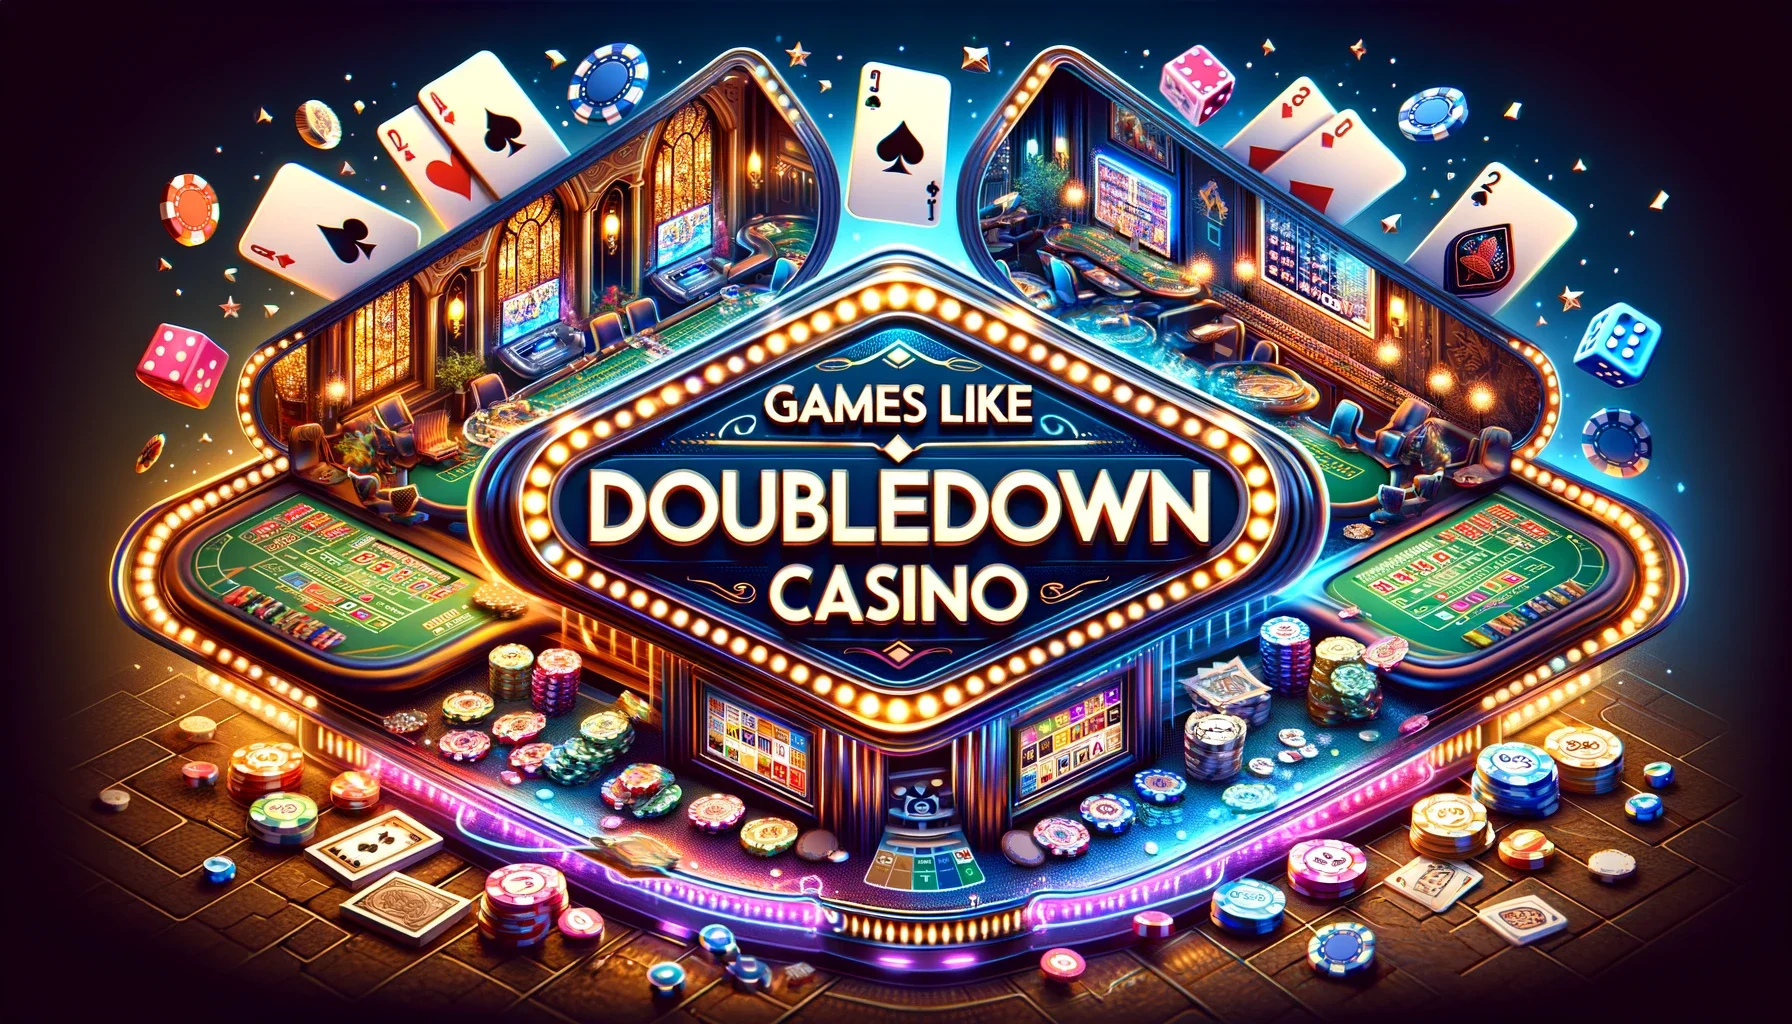 Games like Doubledown Casino